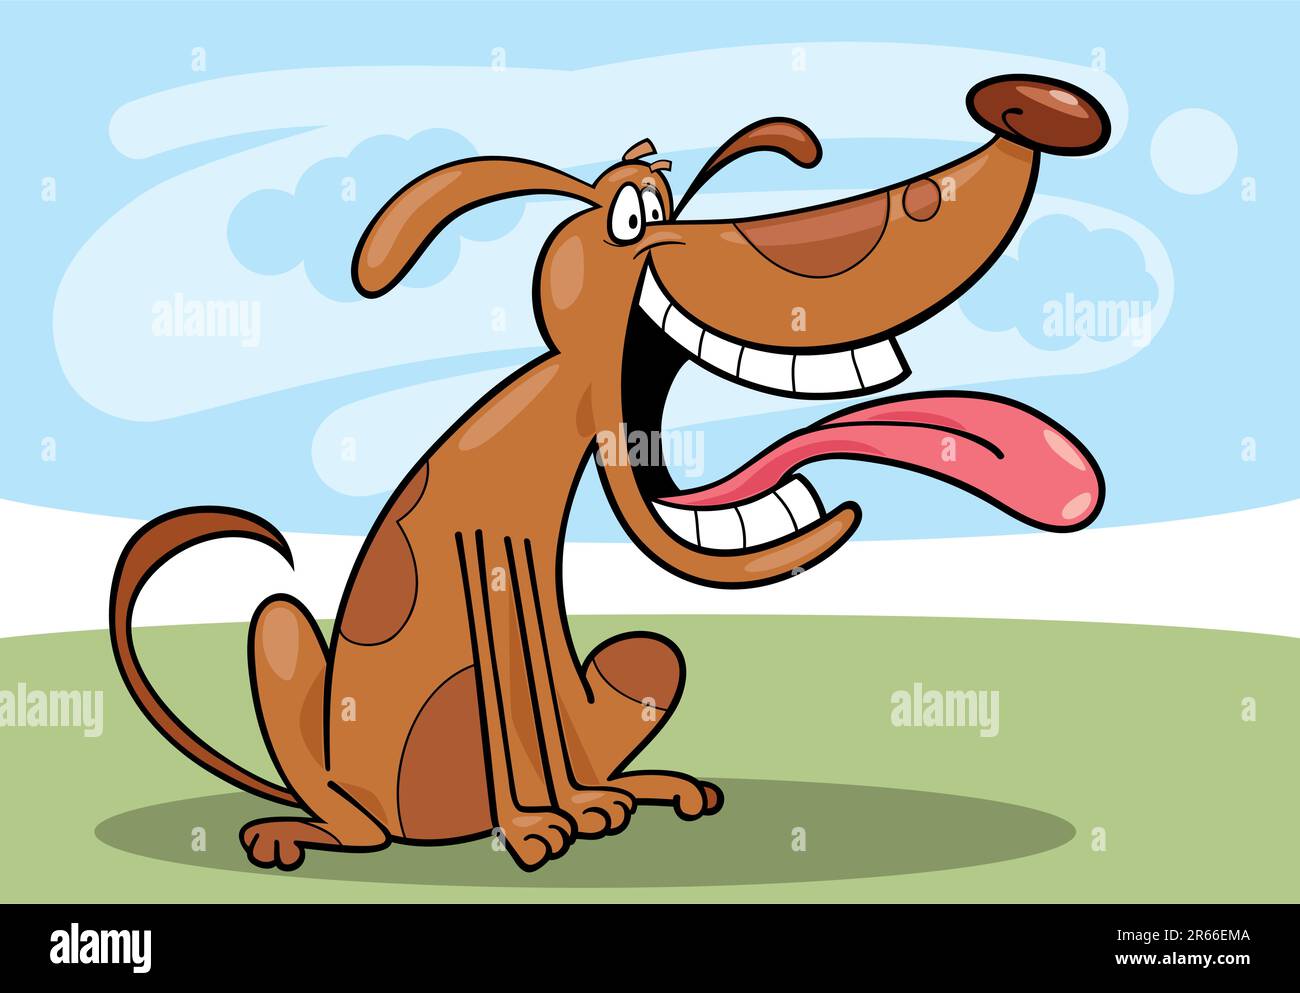 Cartoon illustration of happy funny dog Stock Vector